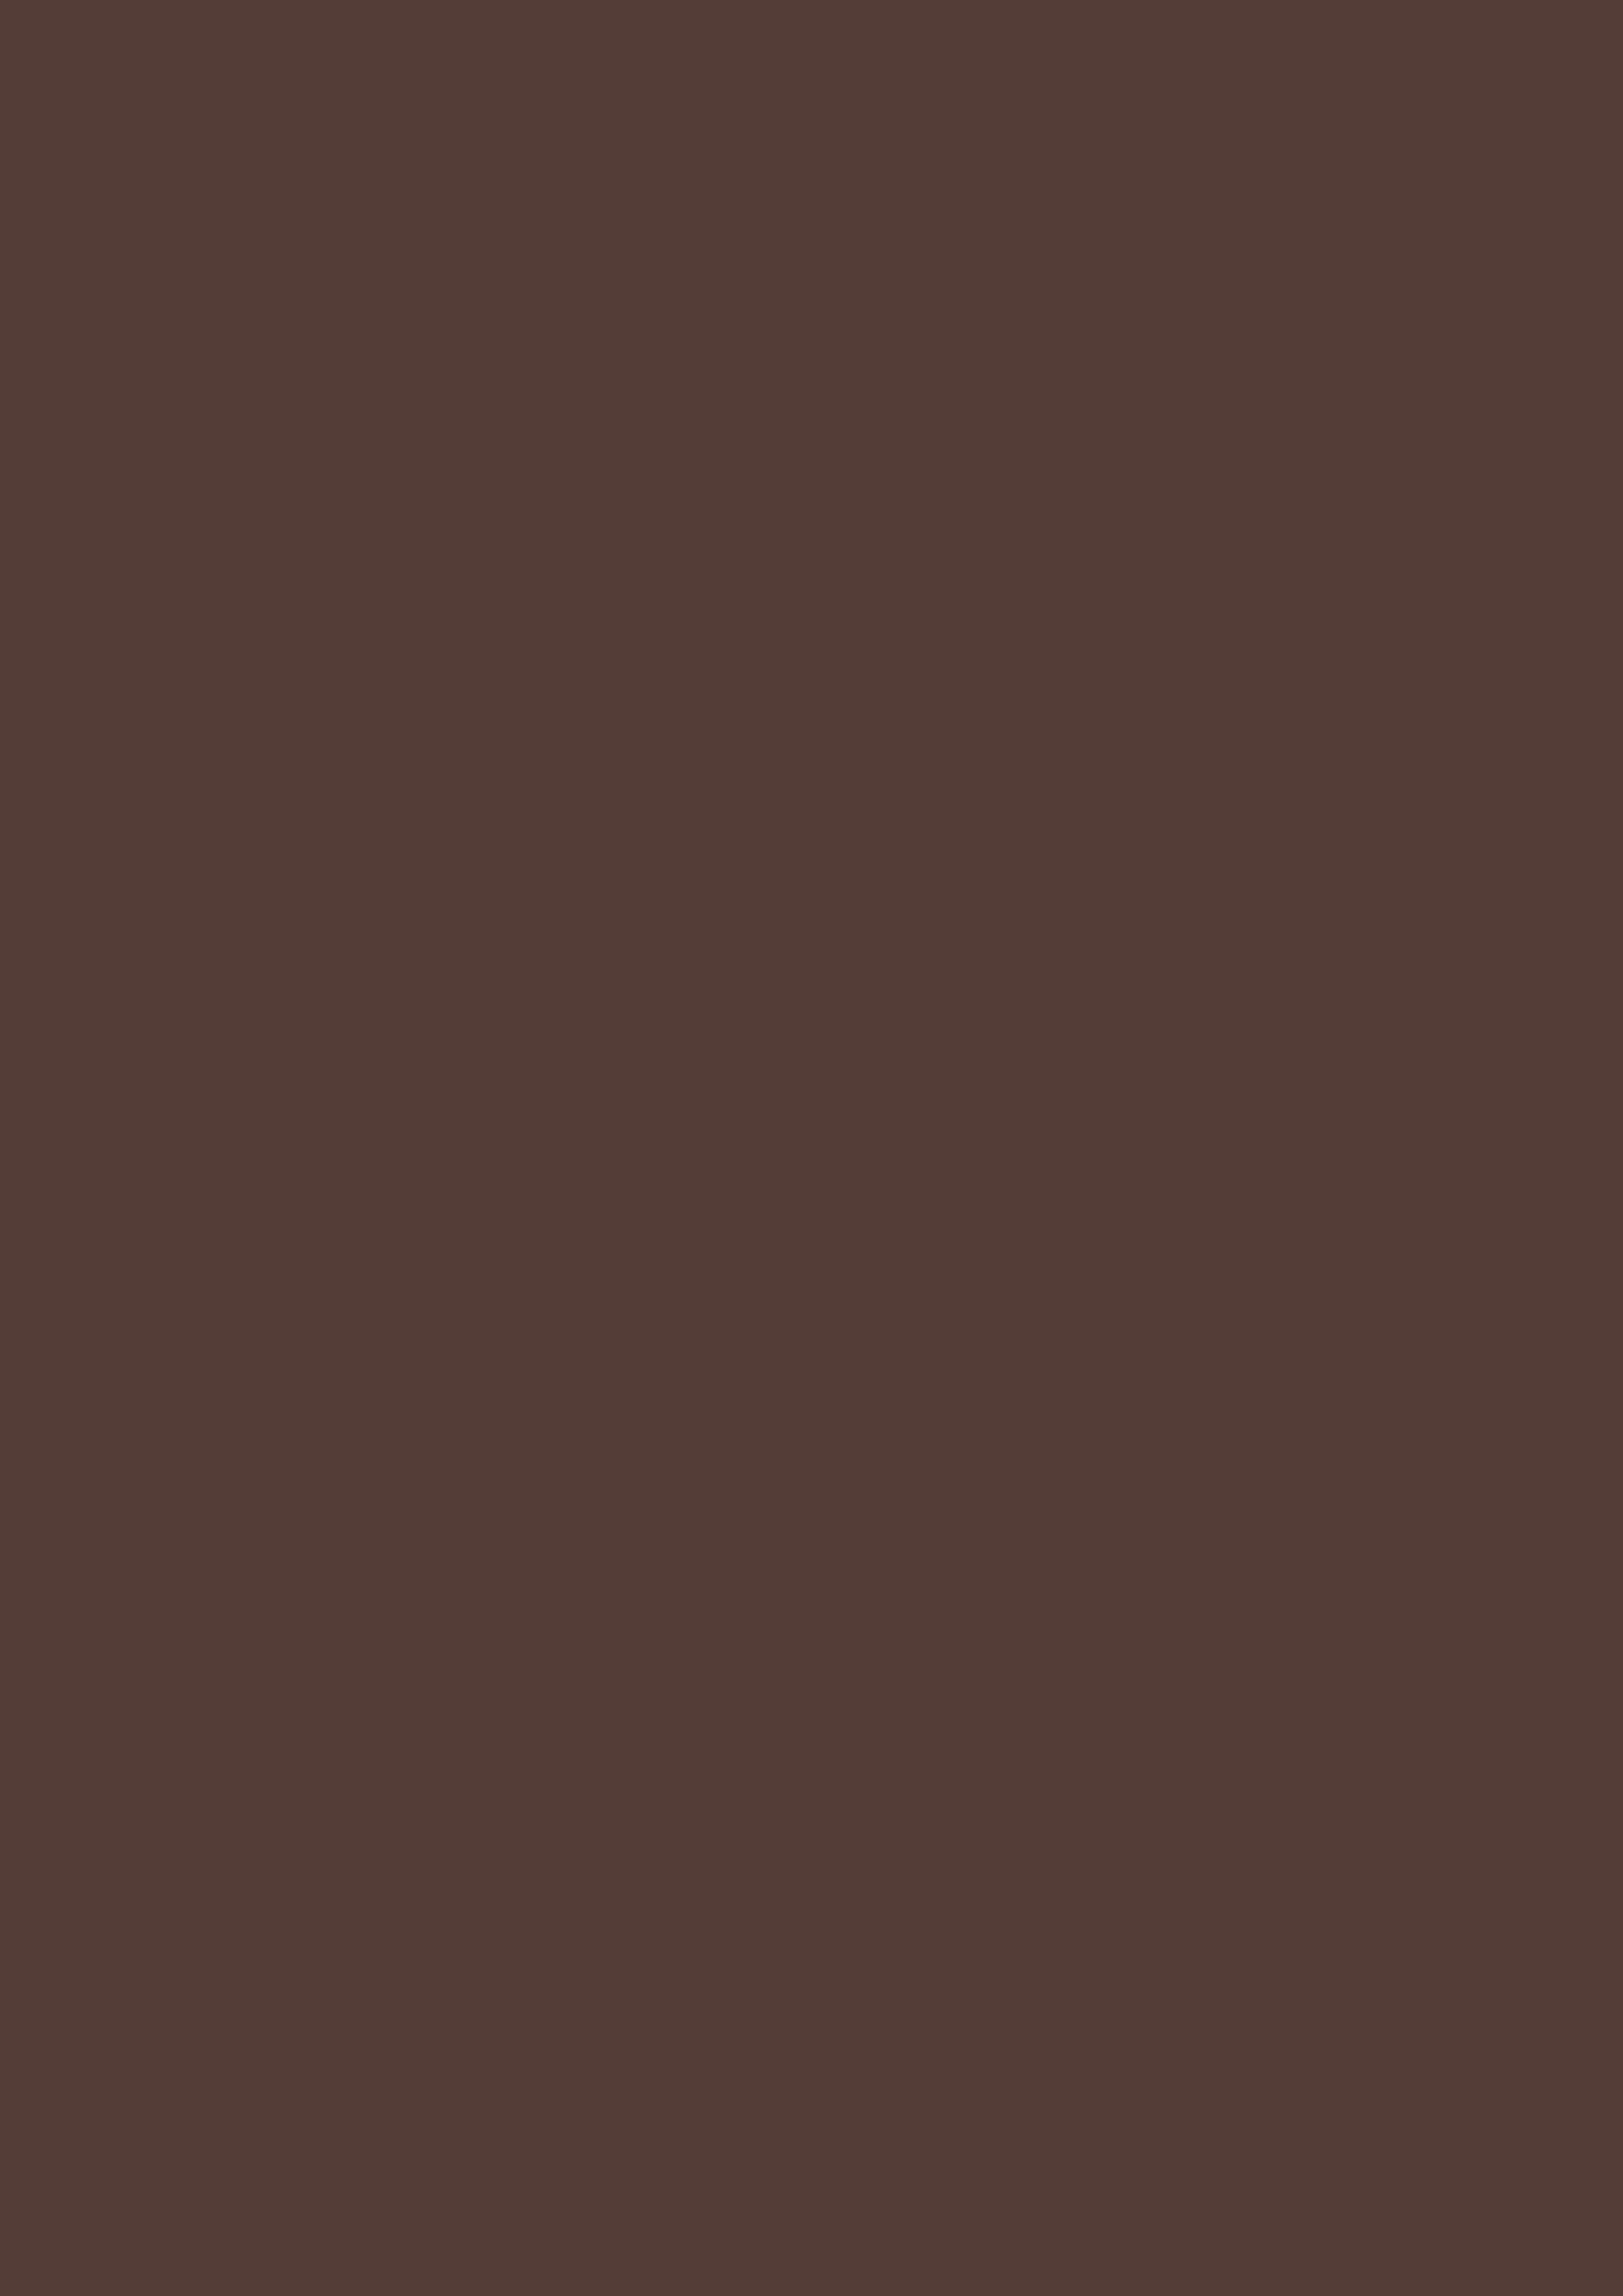 2480x3508 Dark Liver Horses Solid Color Background